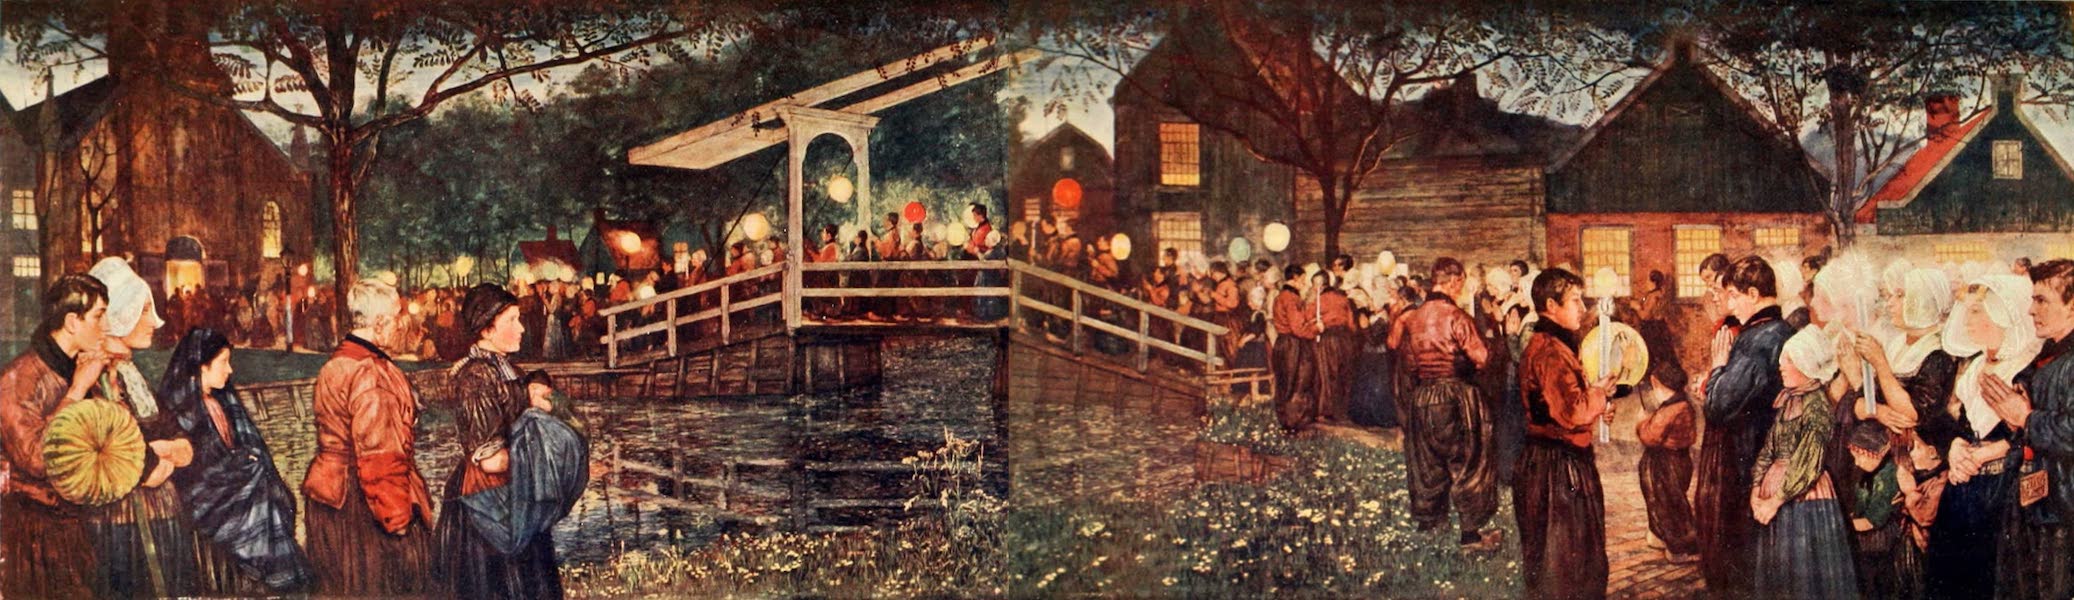 Holland, by Nico Jungman - Religious Procession [Composite] (1904)